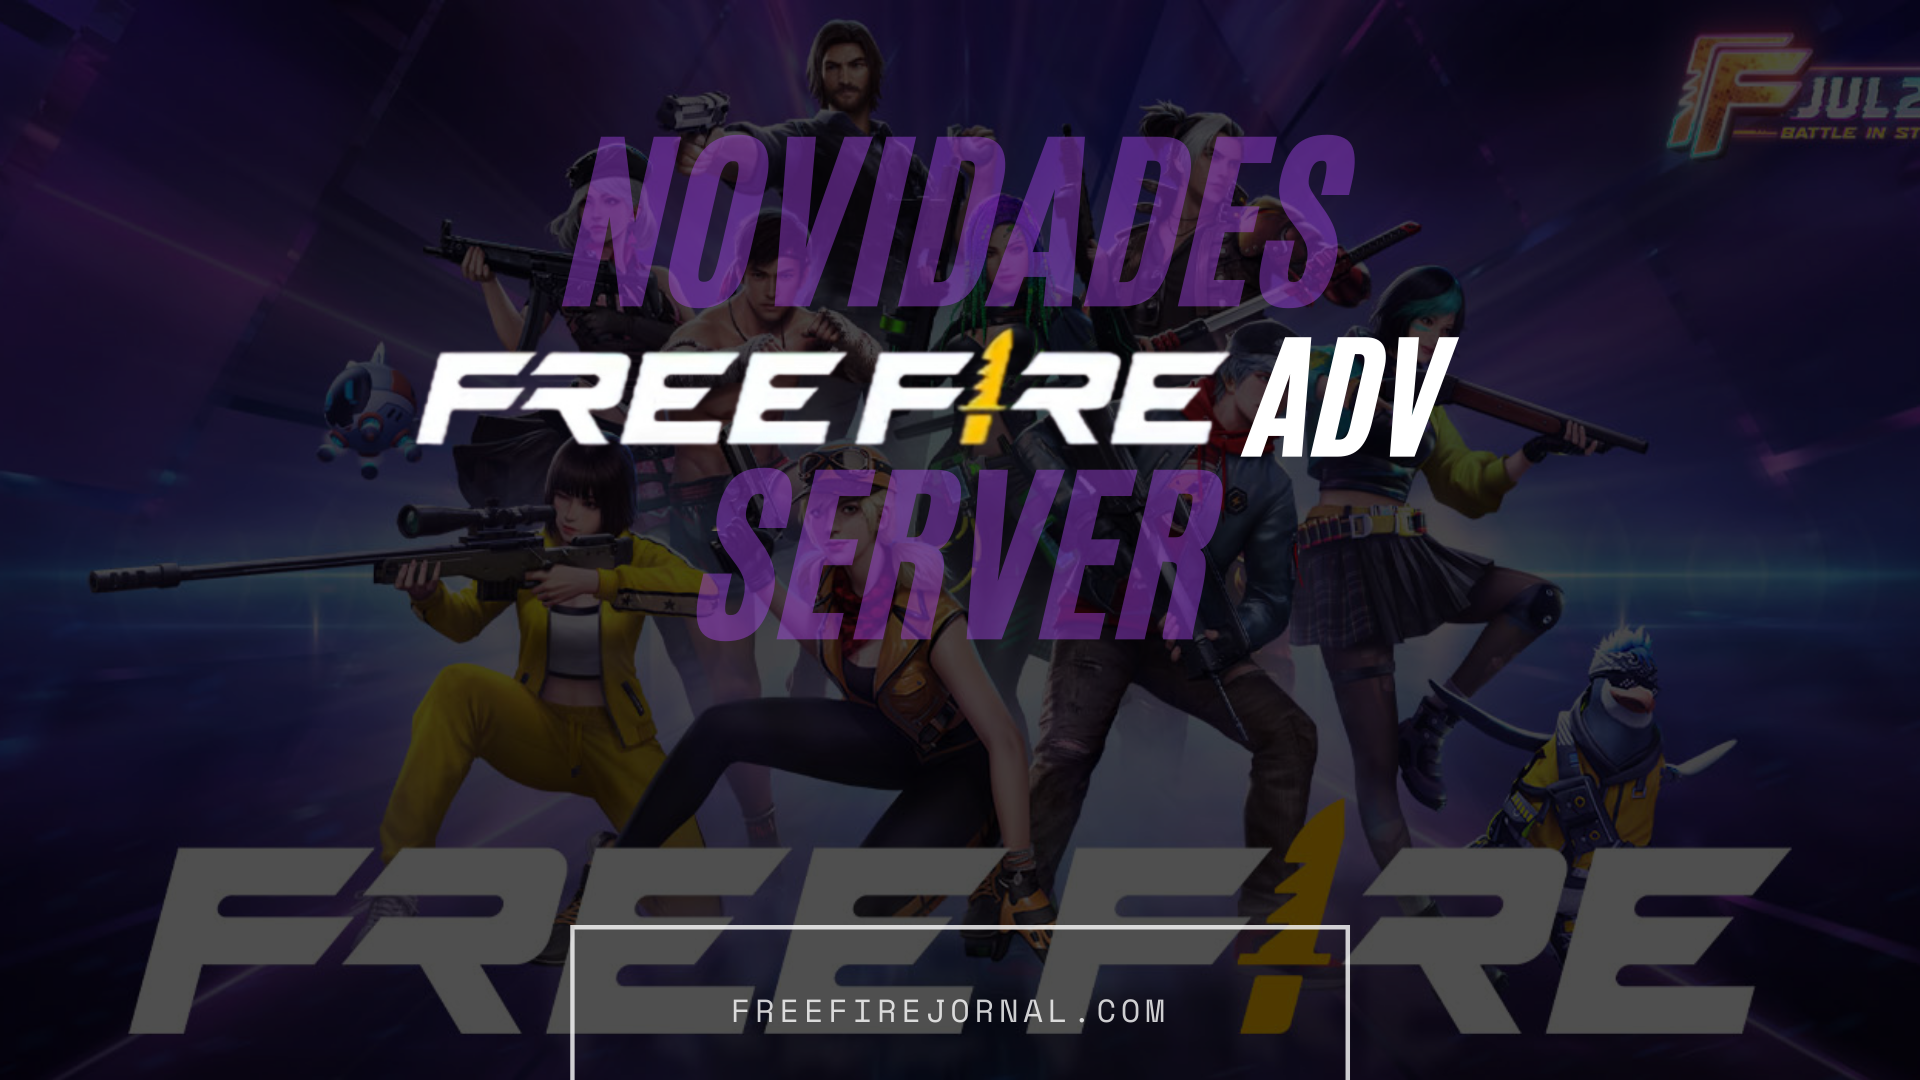 SERVIDOR AVANÇADO FREE FIRE - Jornal Gamer